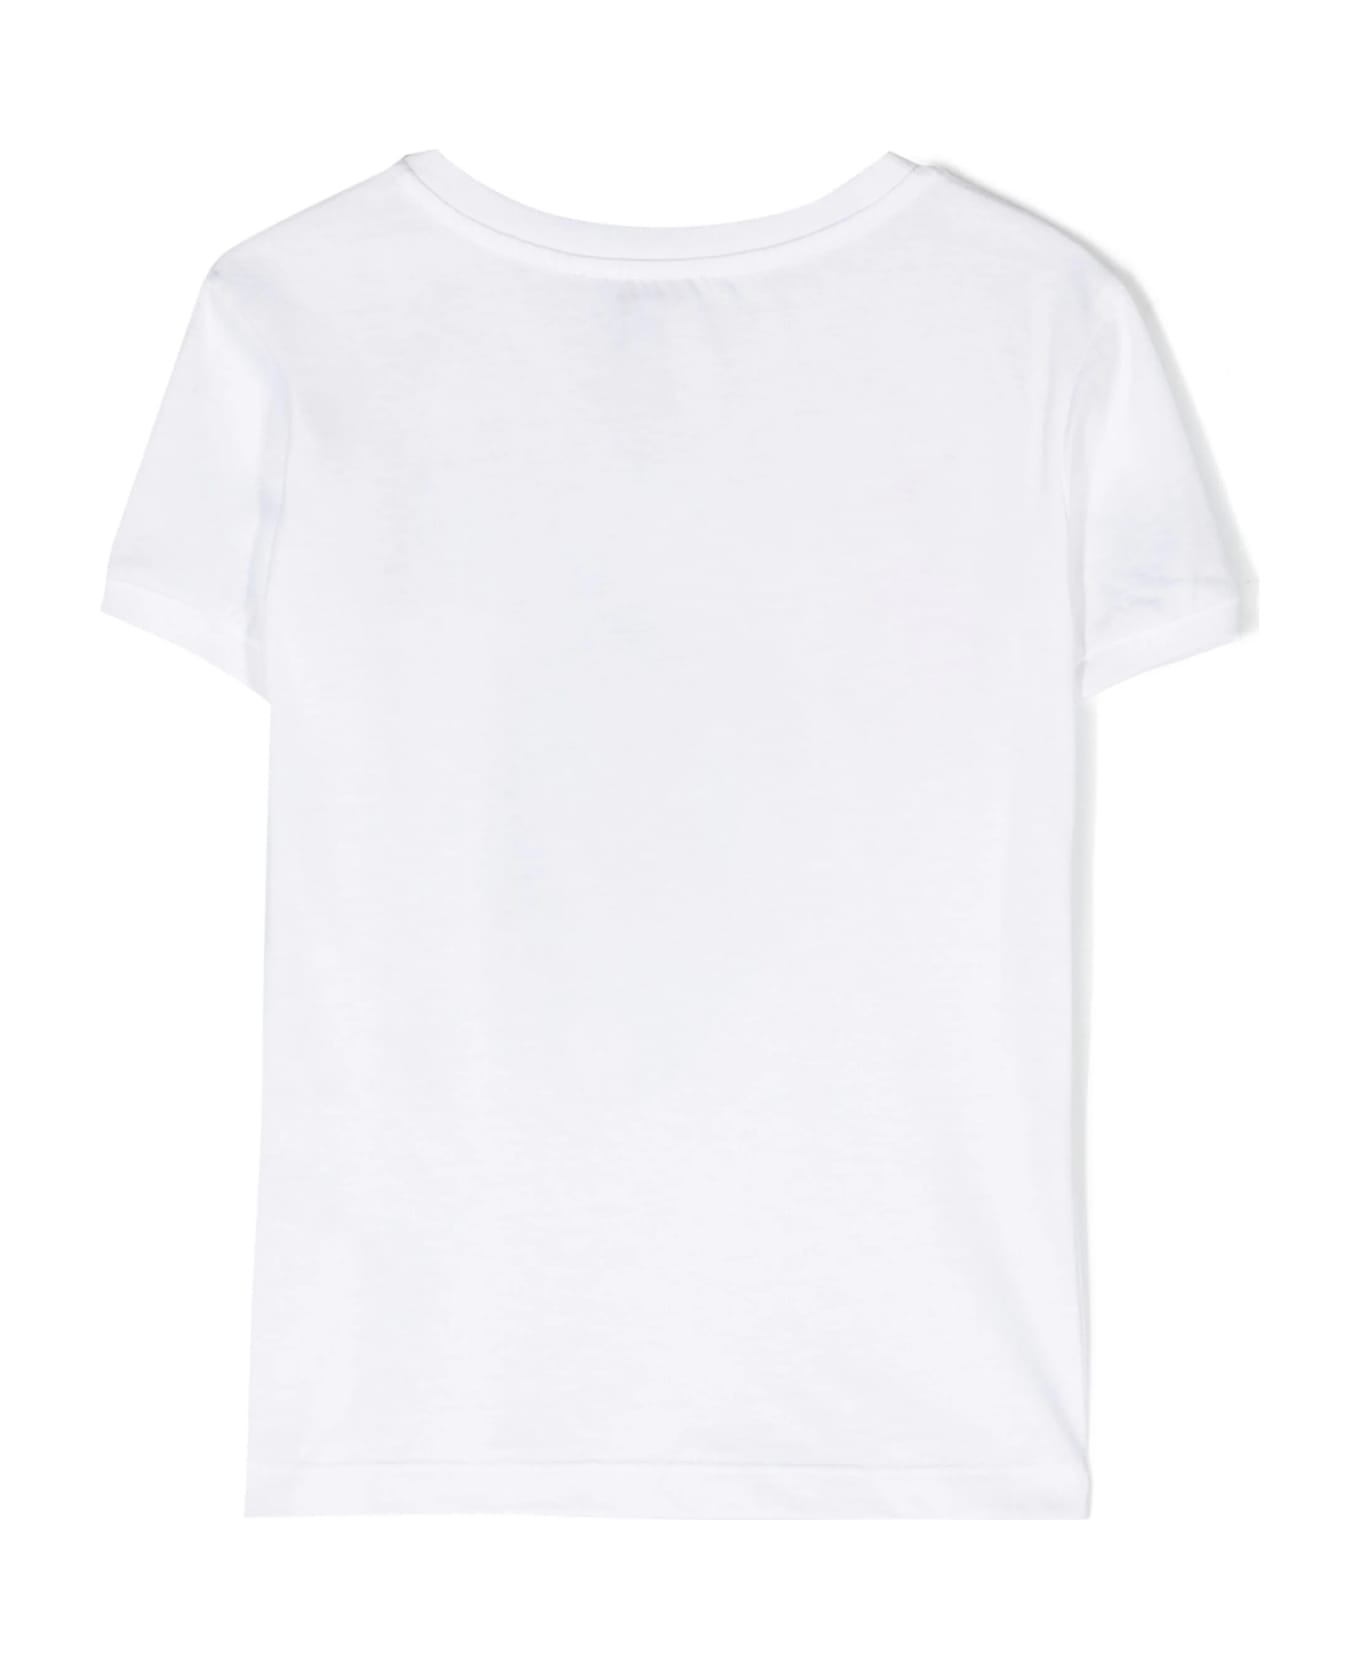 Dolce & Gabbana White T-shirt With Oranges Print - White